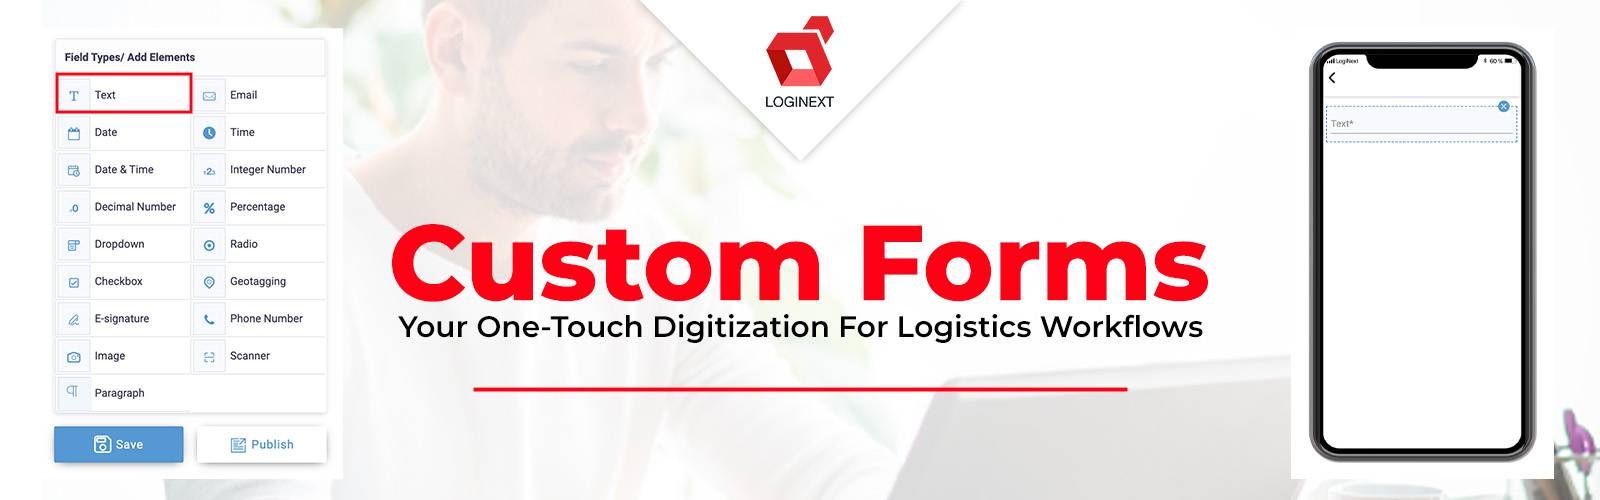 Custom forms to digitize logistics operations